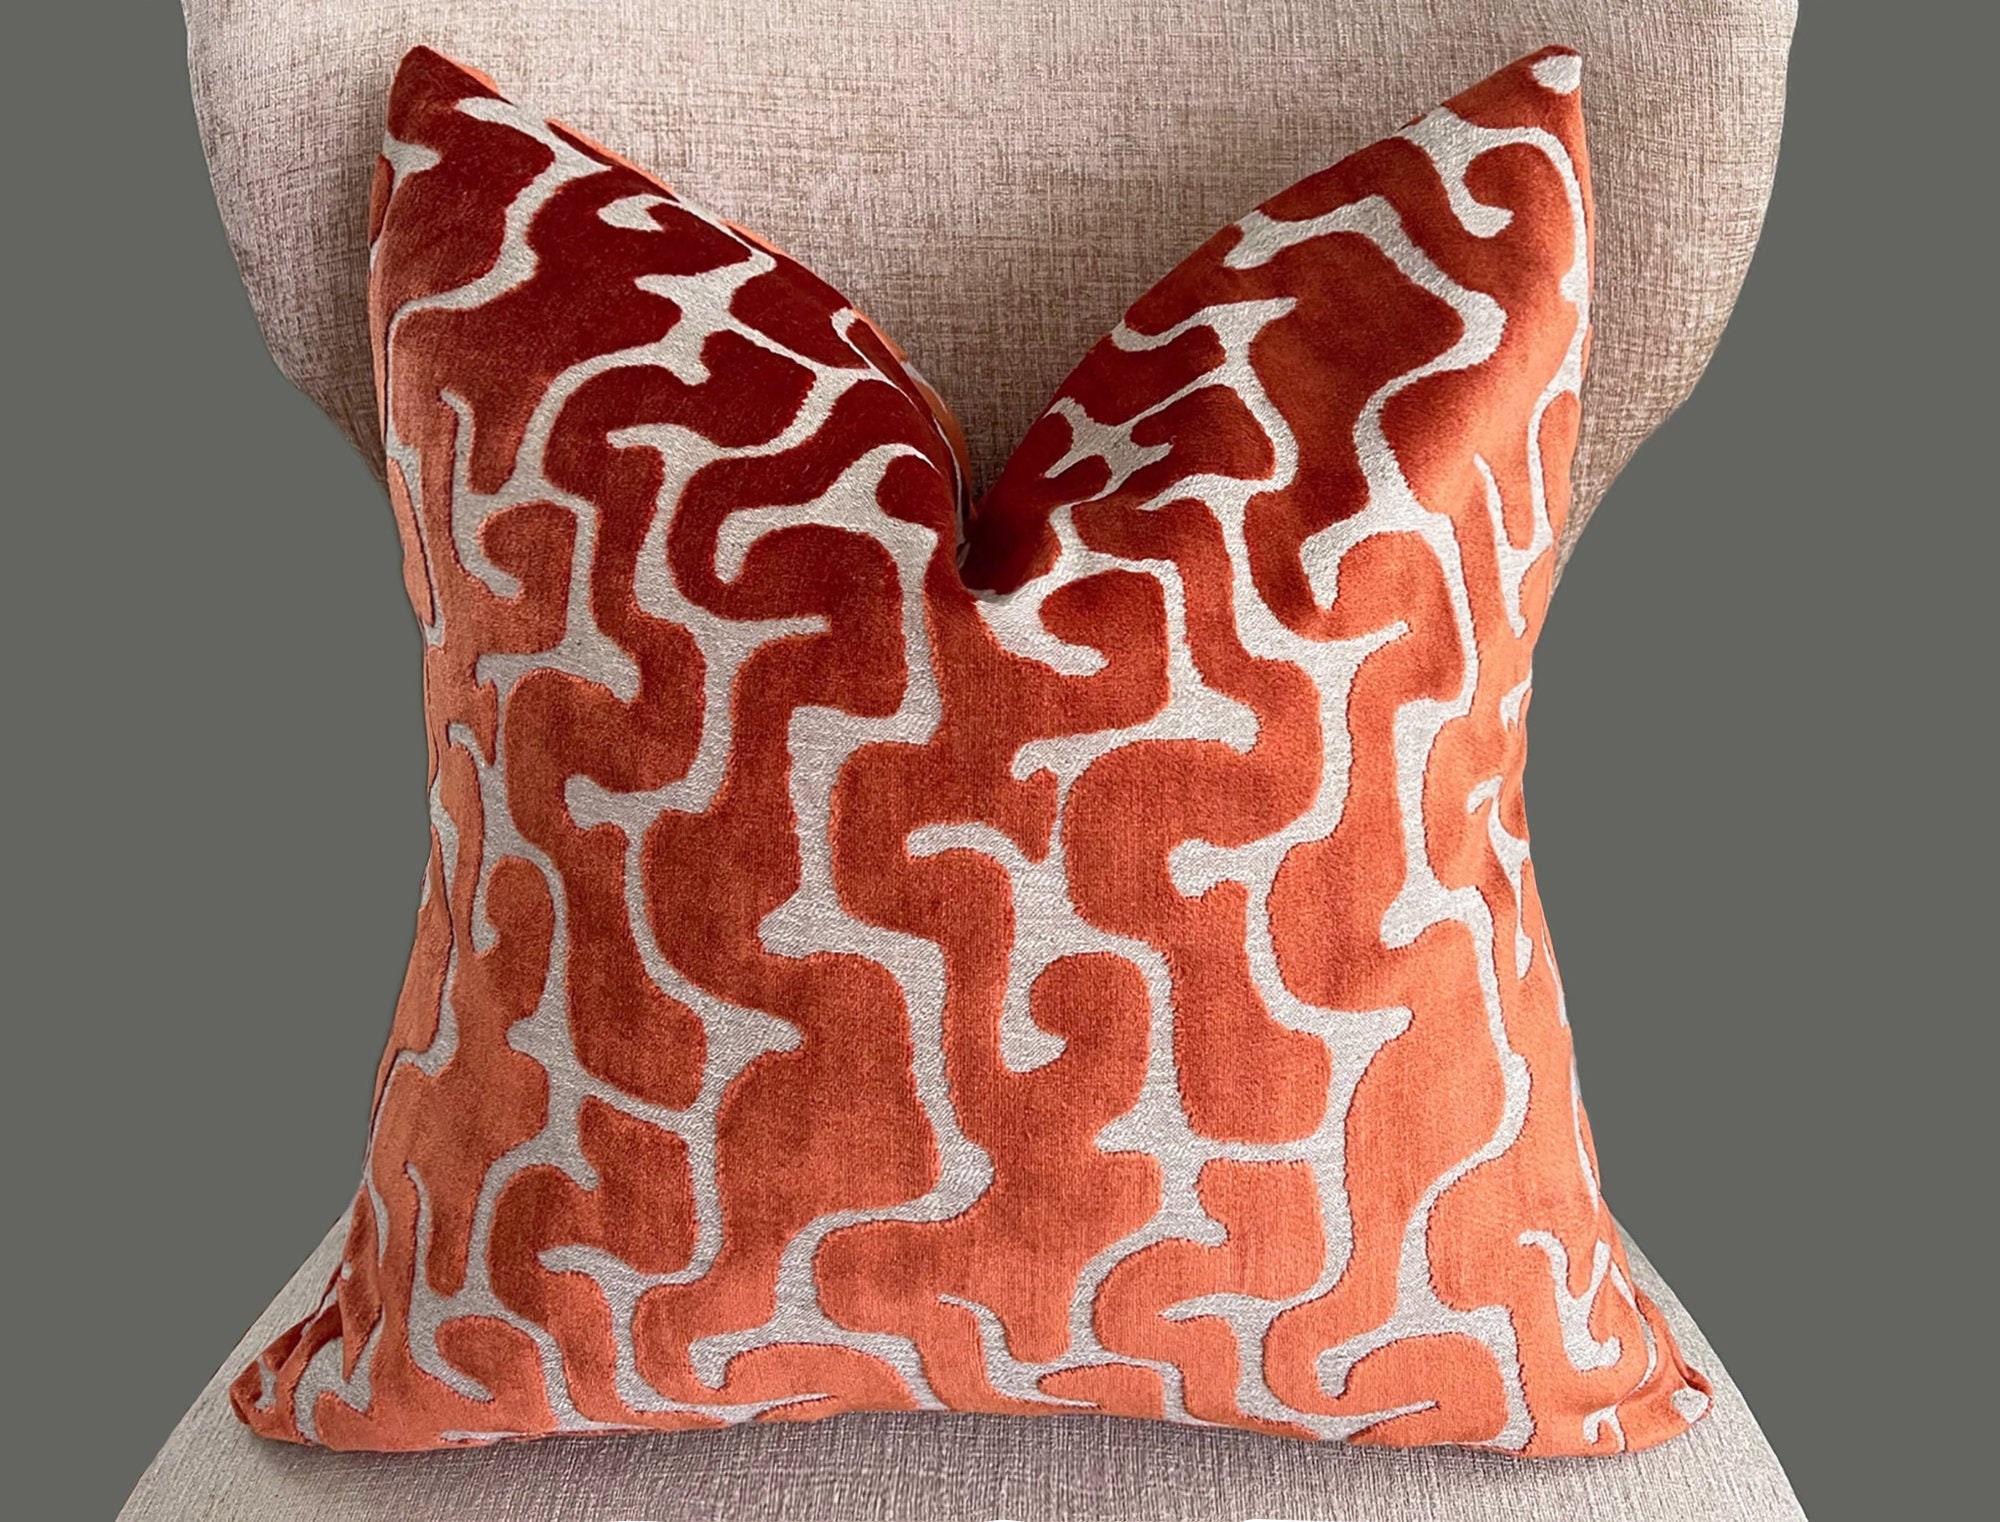 18X18 Orange Cotton Velvet Square Throw Pillow With Tassel Edge